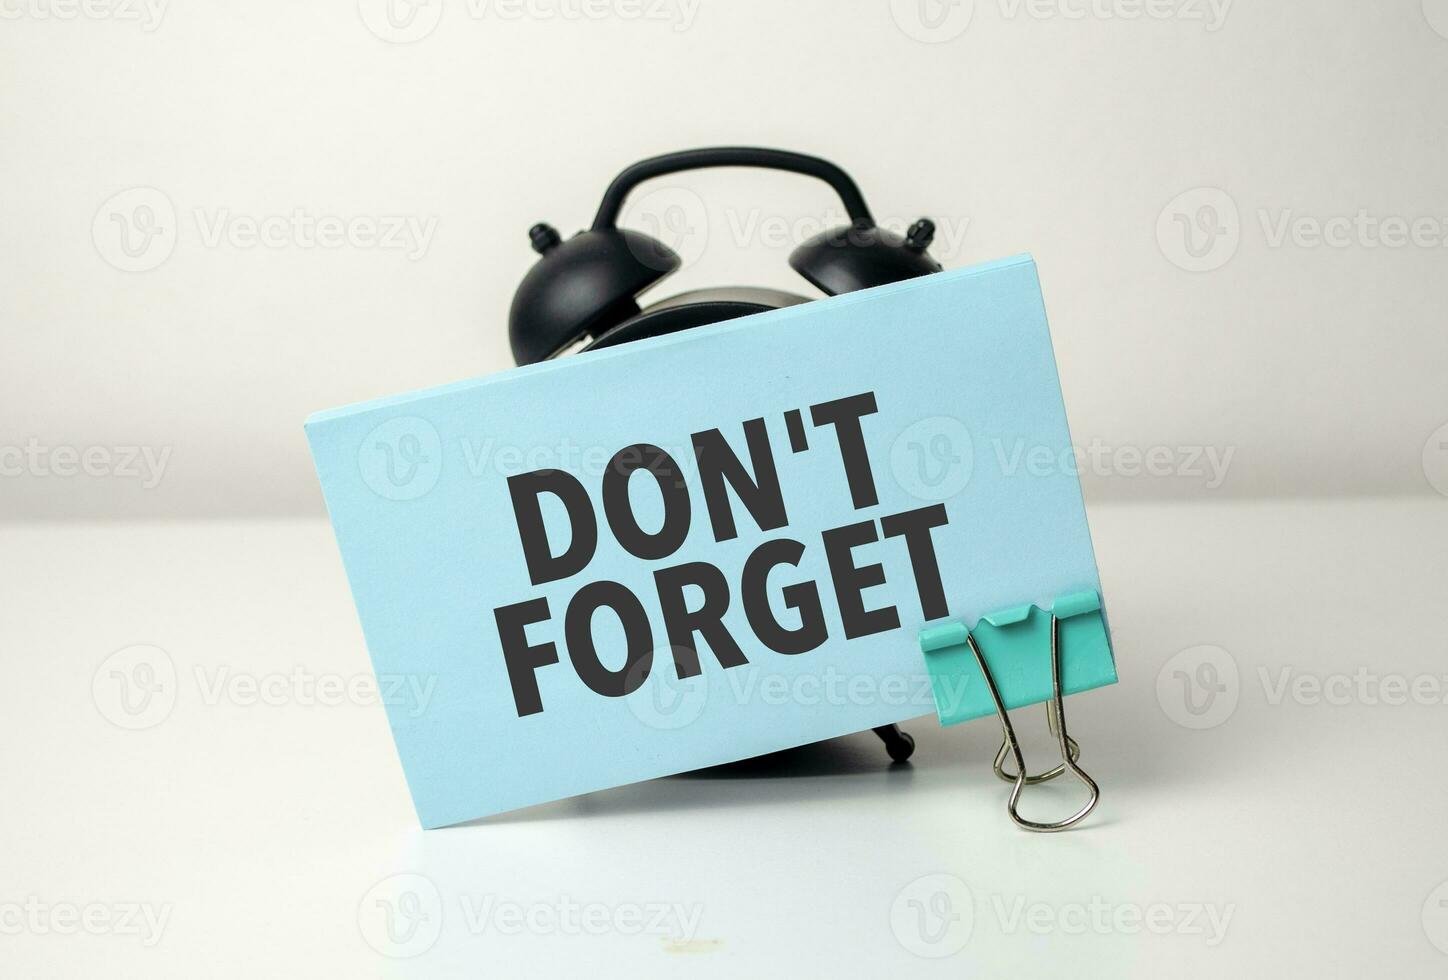 Don't forget is written in a blue sticker near a black alarm clock photo